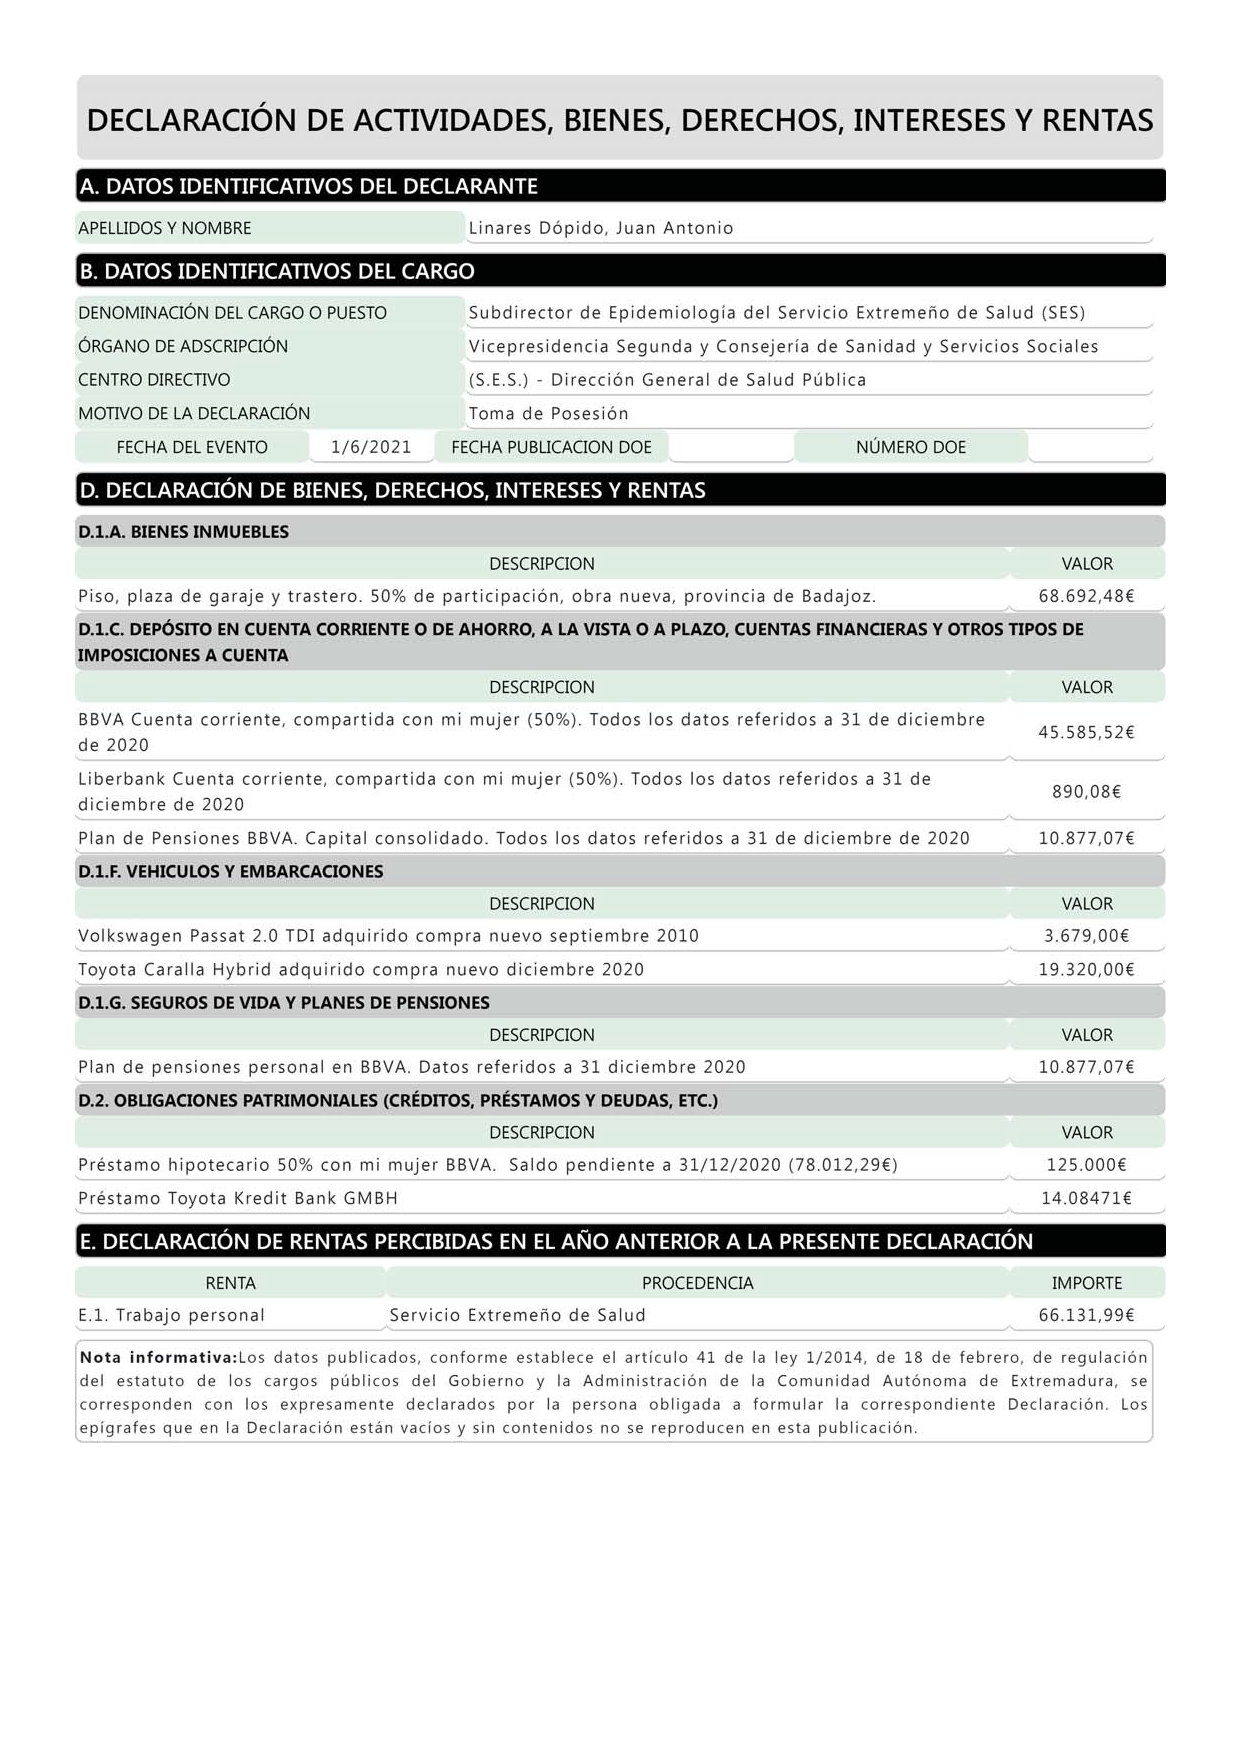 ANEXOS RELACION DE DECLARACIONES OBLIGATORIAS PRESENTADAS POR CAUSA DE TOMA DE POSESION Pag 3